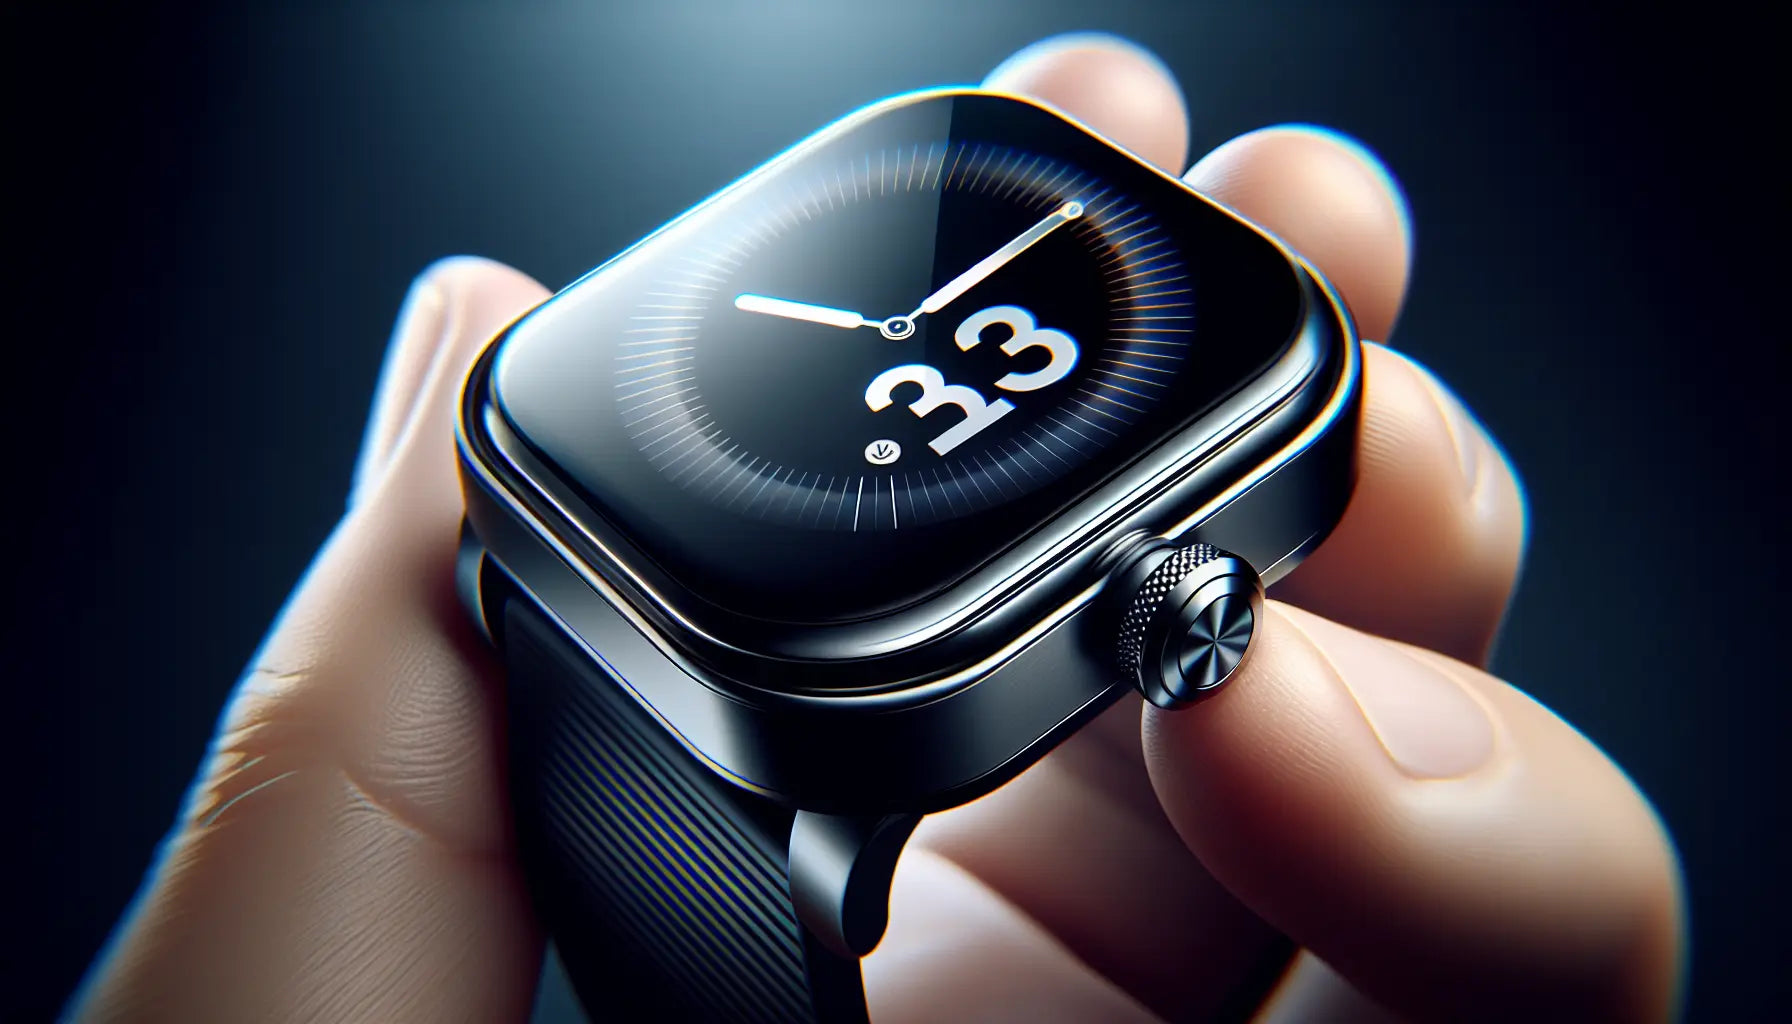 Huawei's Apple Watch Clone: A Closer Look